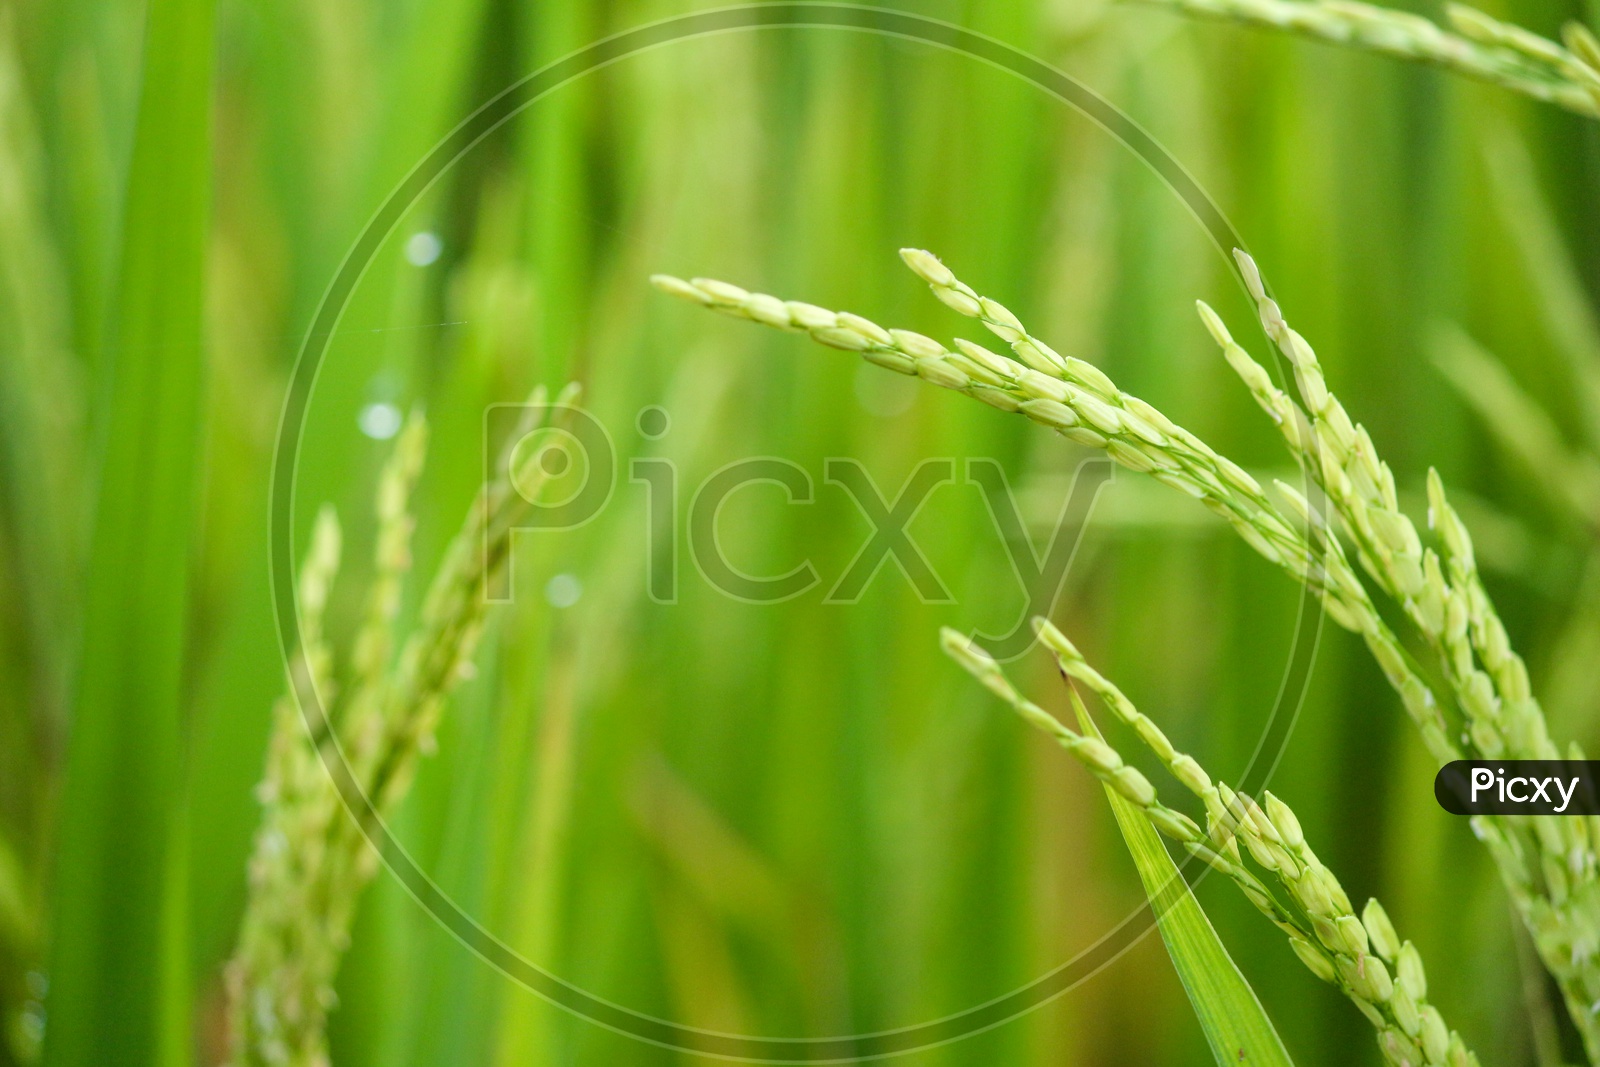 Rice plant seeds